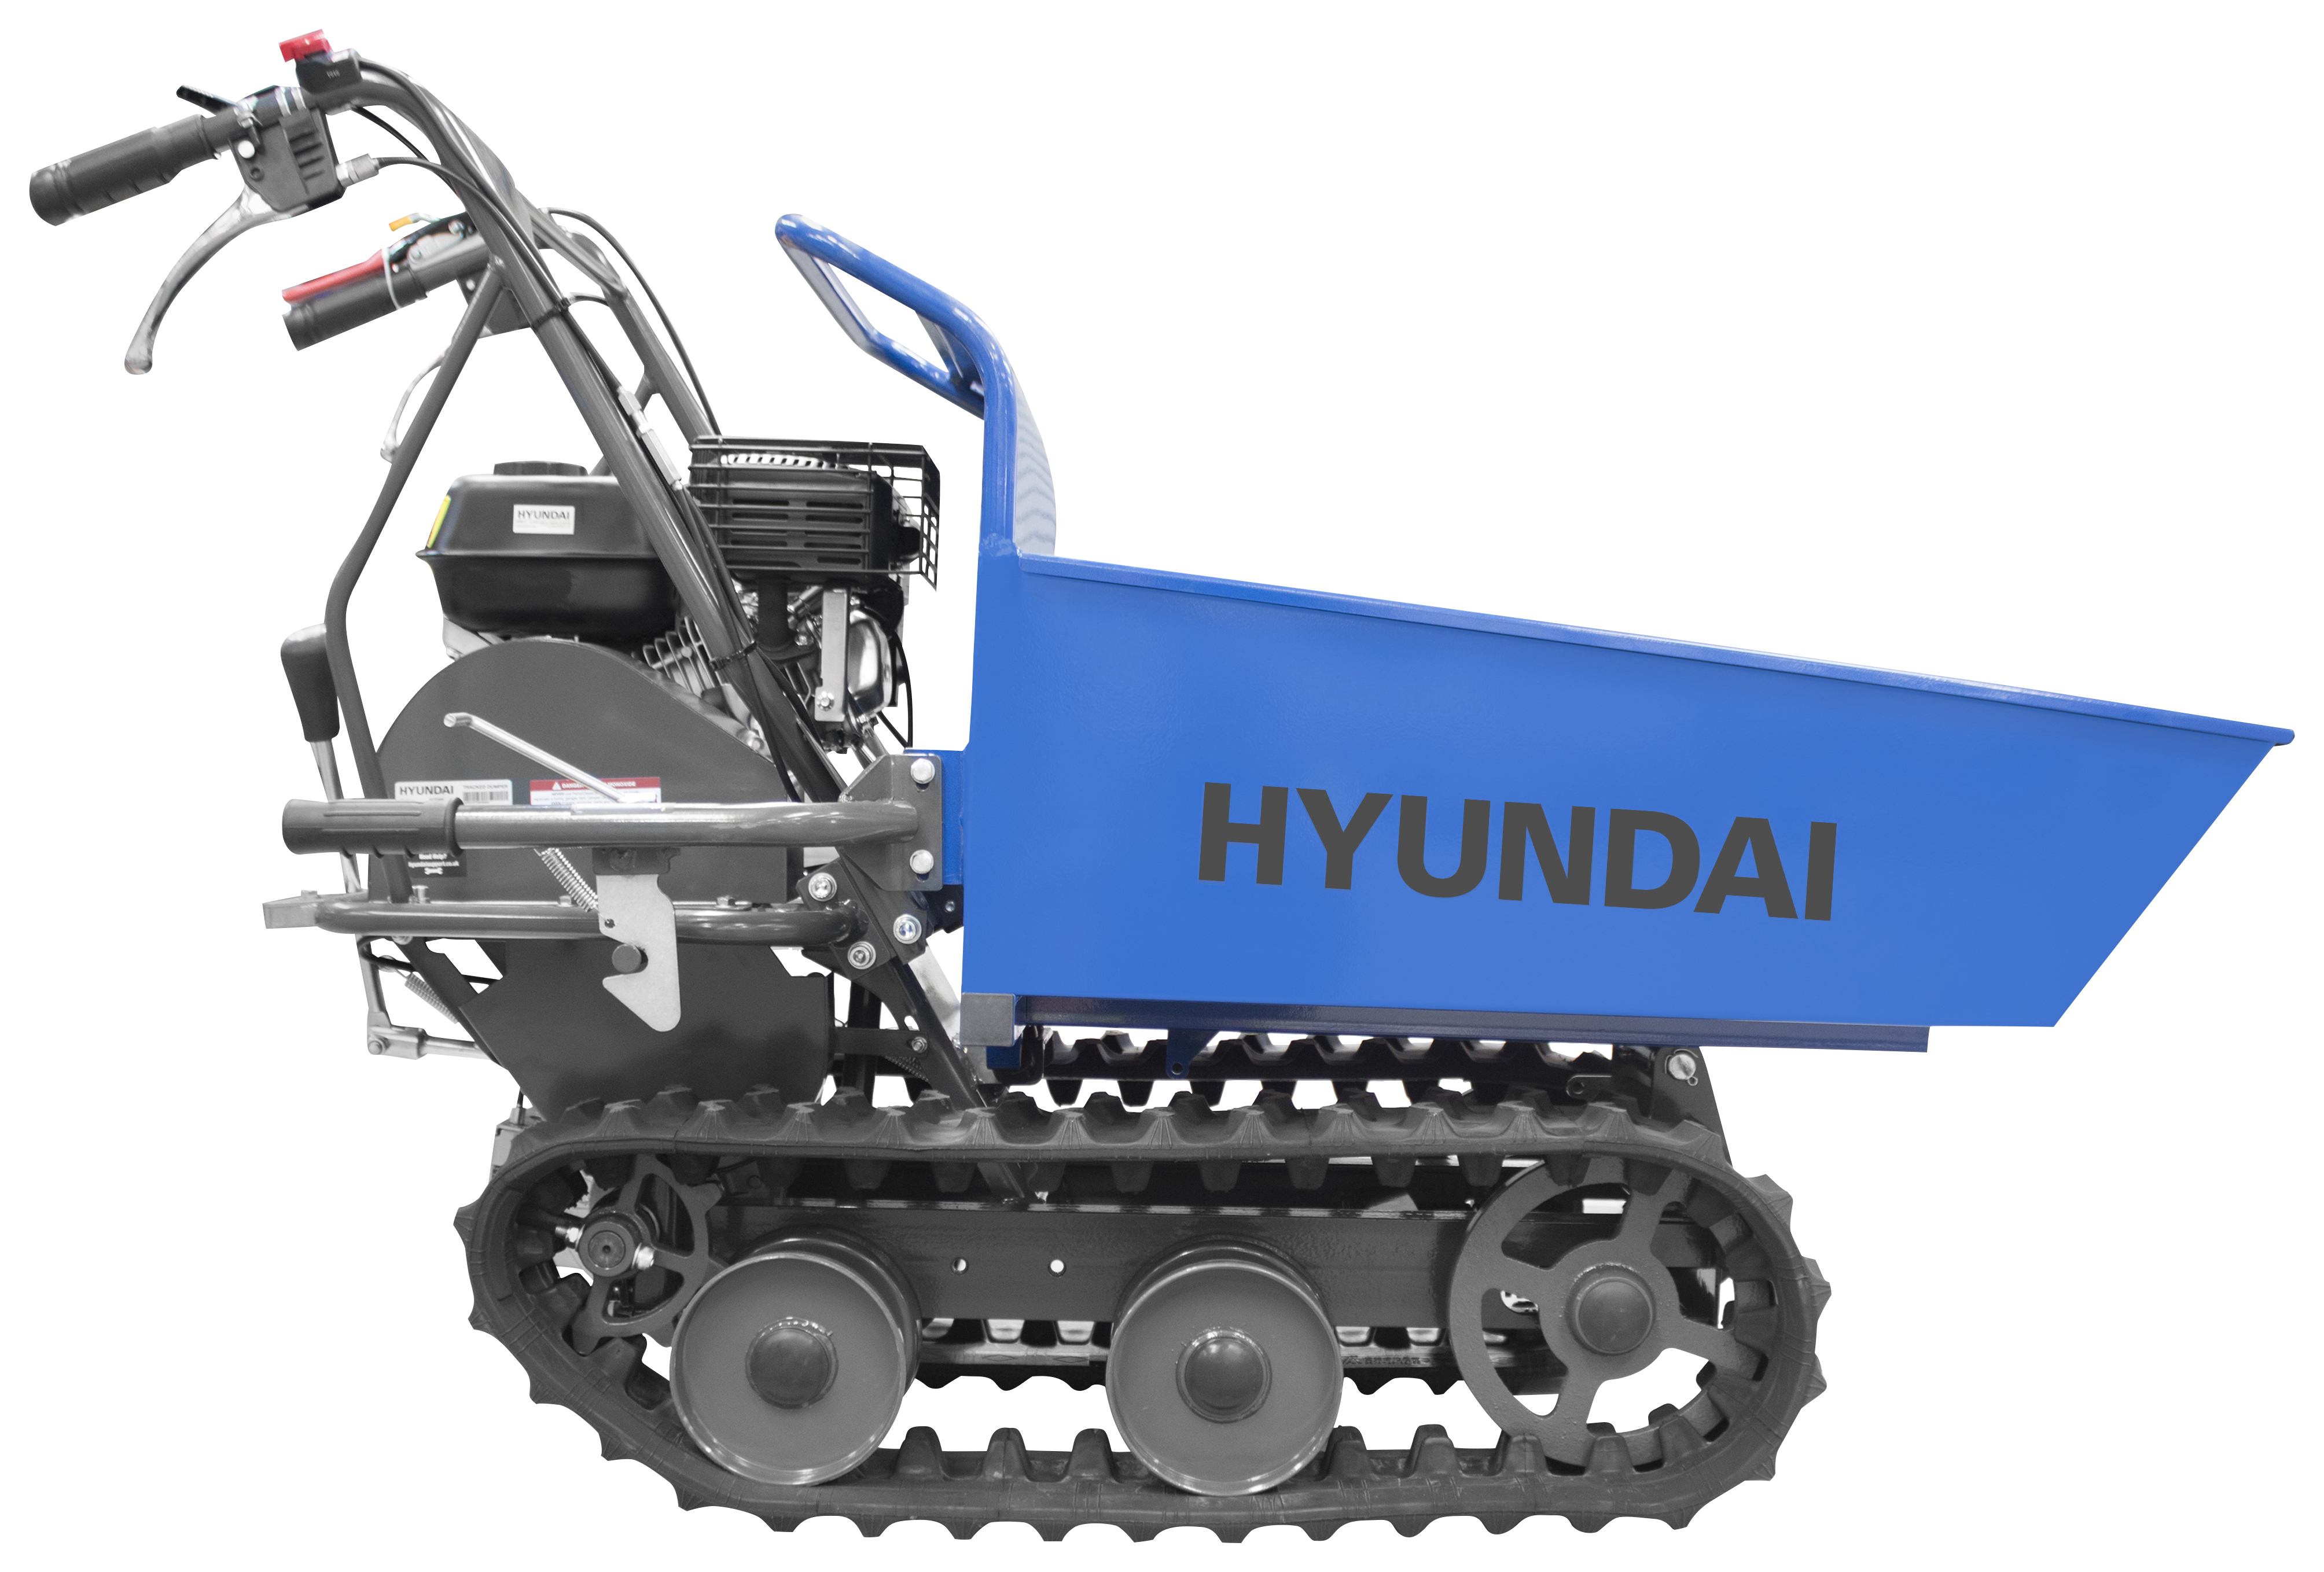 Hyundai HYTD300 196CC IC200V 300kg Petrol Engine Powered Tracked Mini Dumper